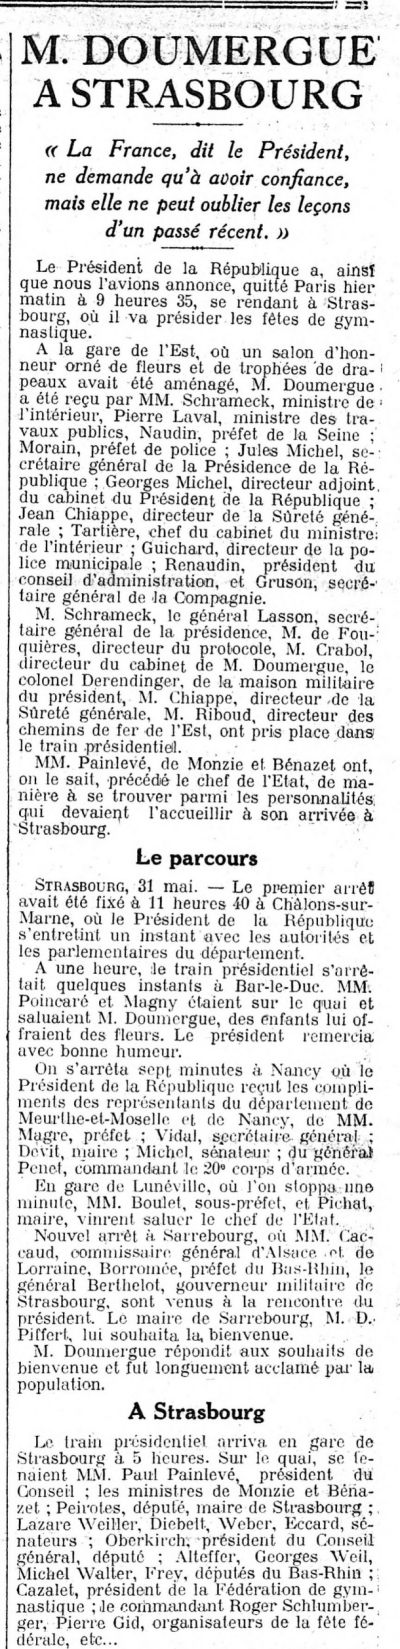 Le Figaro du 01 juin 1925 Source Gallica.bnf.fr